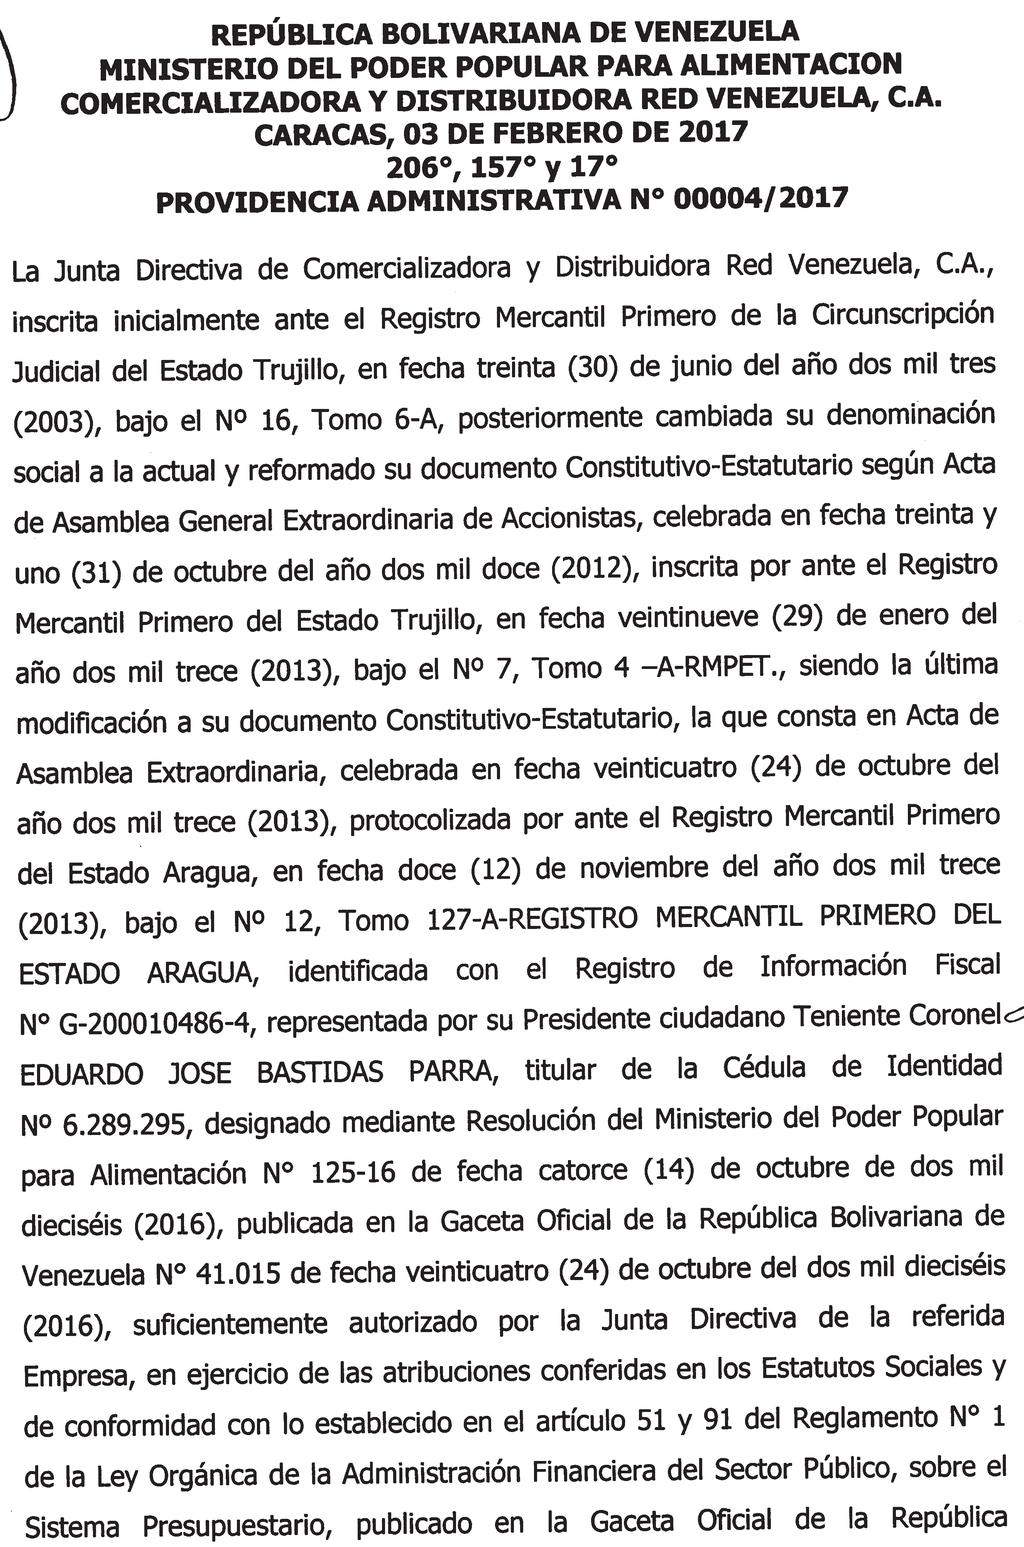 437.318 GACETA OFICIAL DE LA REPÚBLICA BOLIVARIANA DE